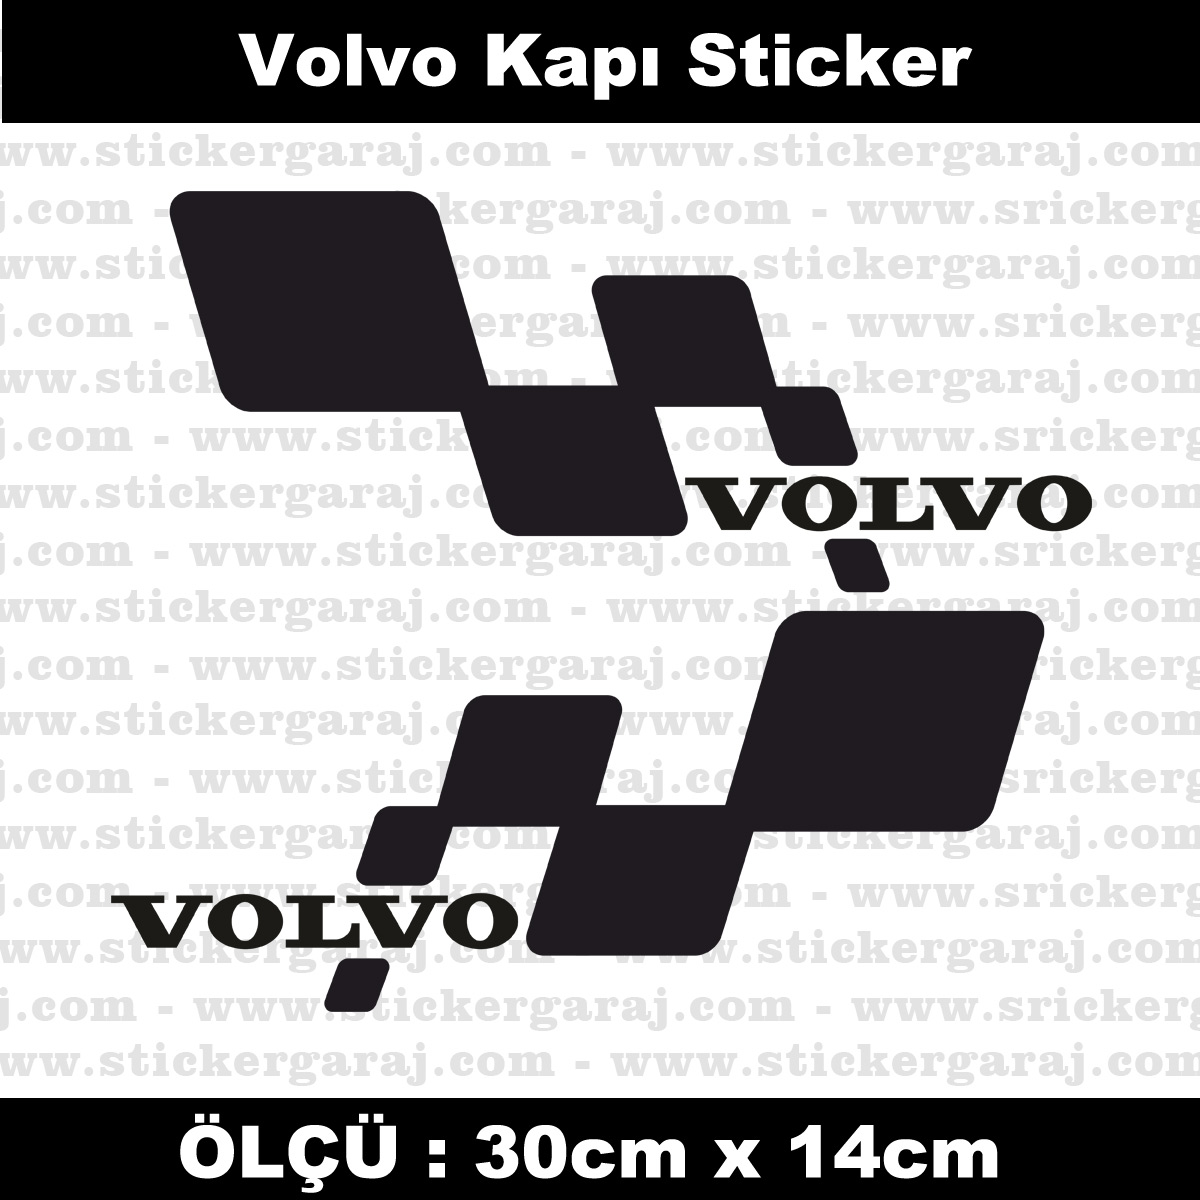 Volvo kapi serit sticker set - Volvo yan kapı şerit sticker 2li